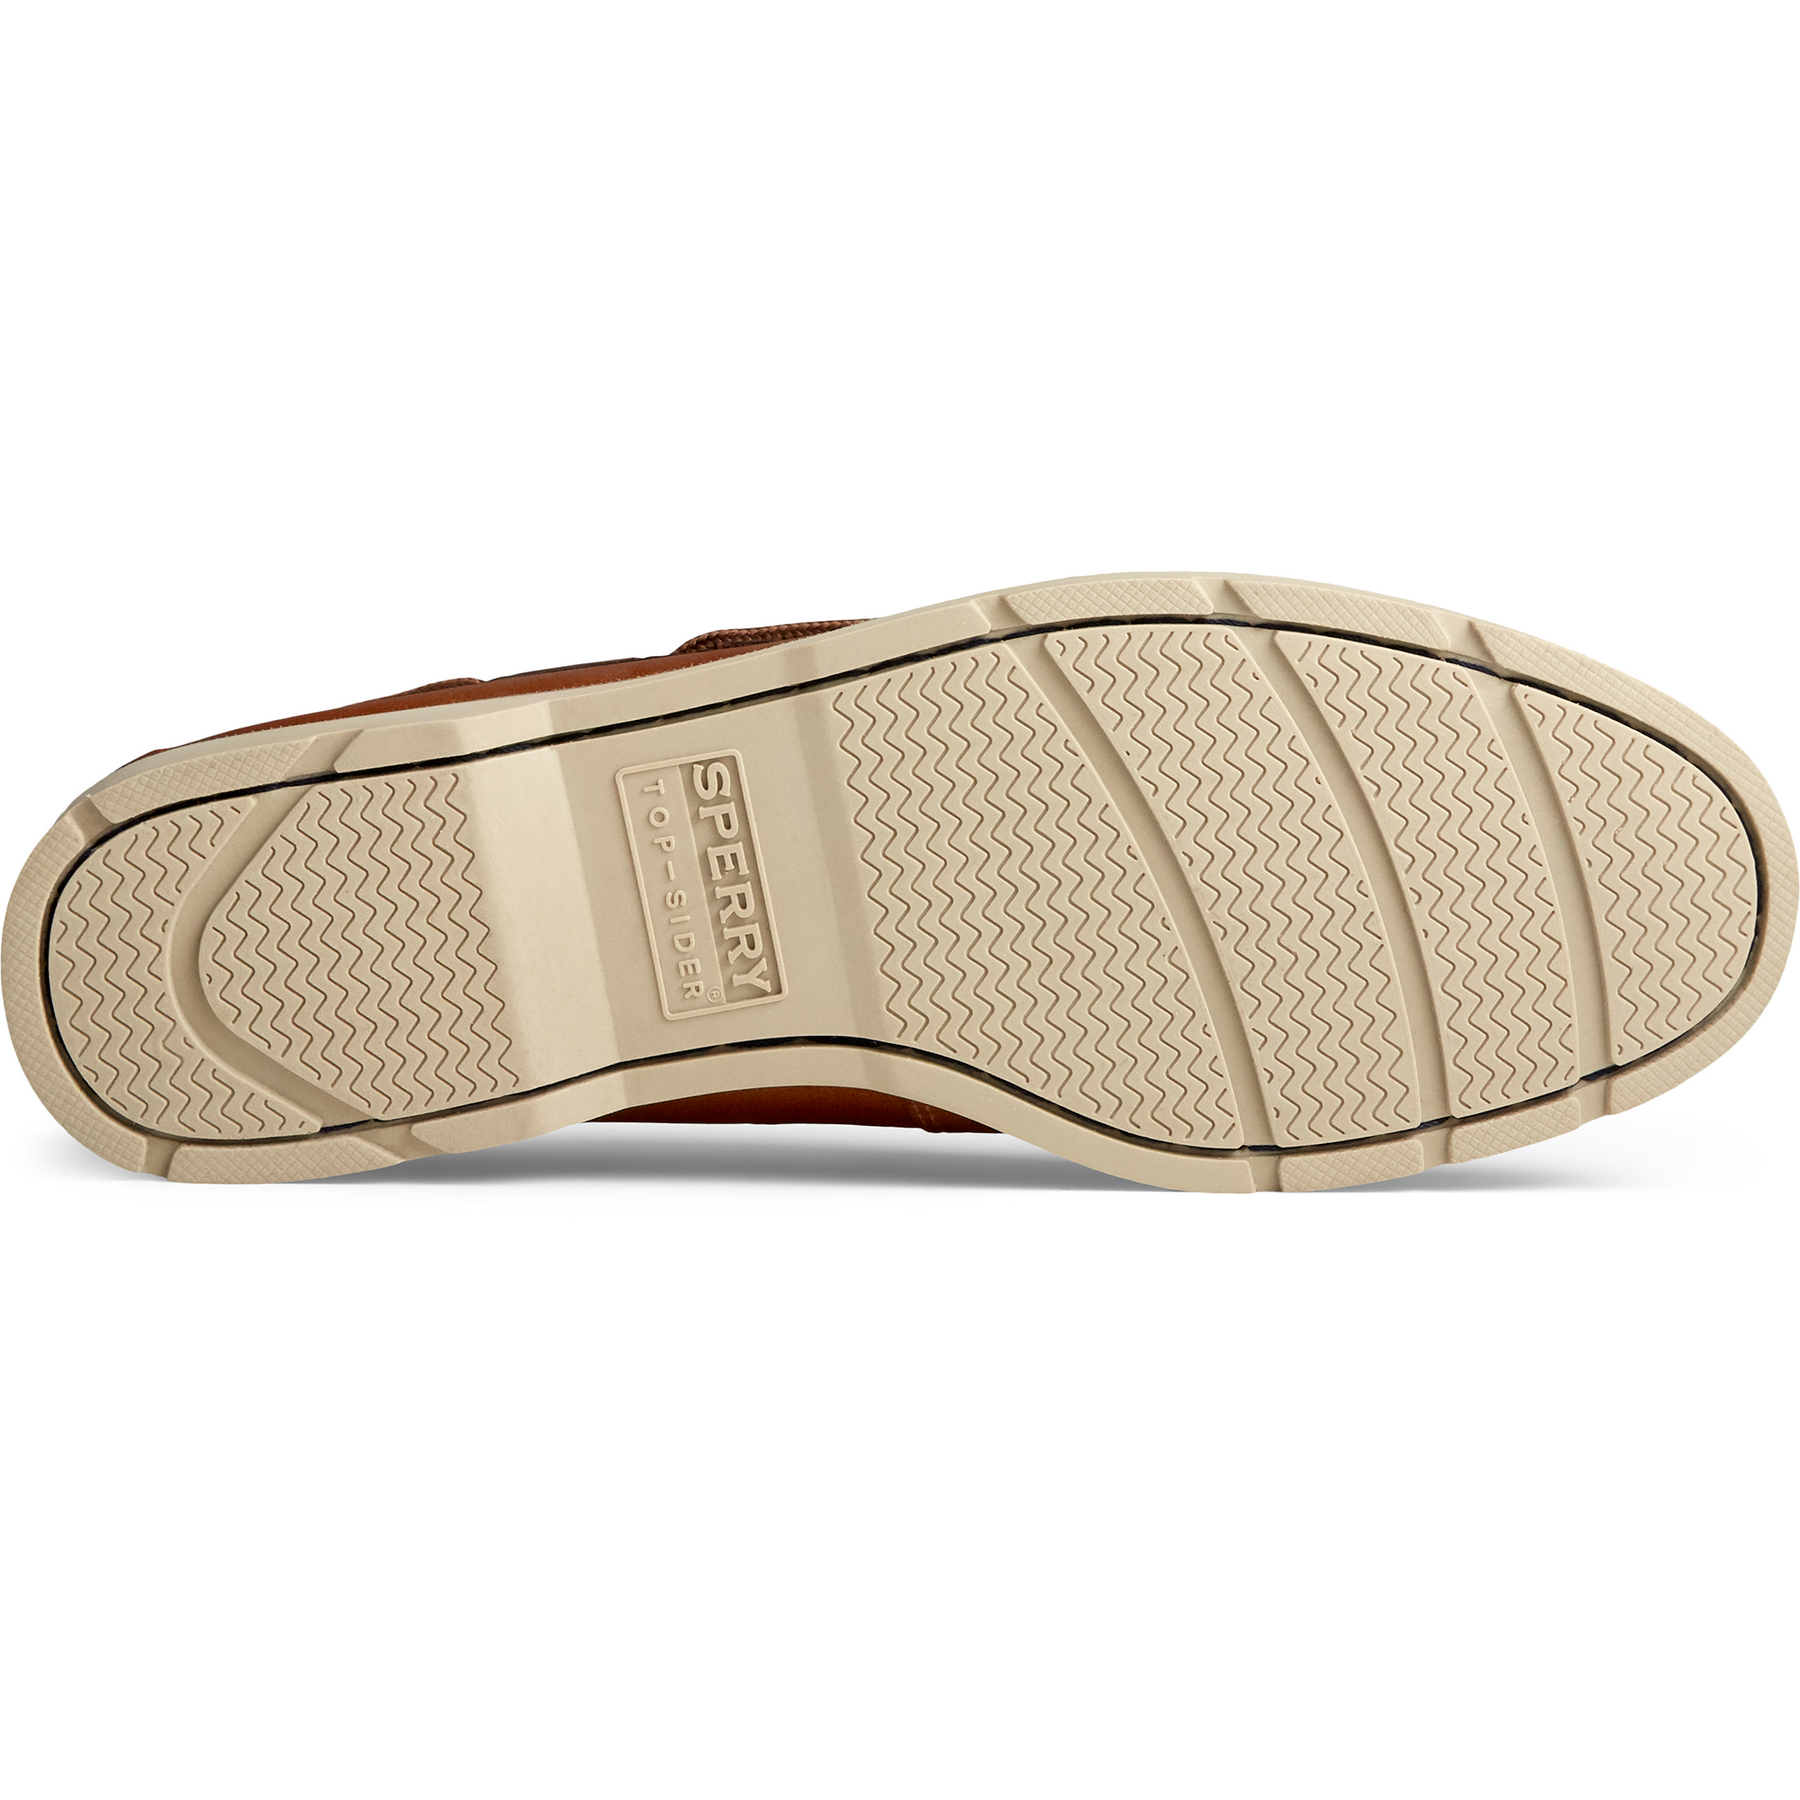 Men's Leeward 2-Eye Leather Tan/Brown Boat Shoes STS22354